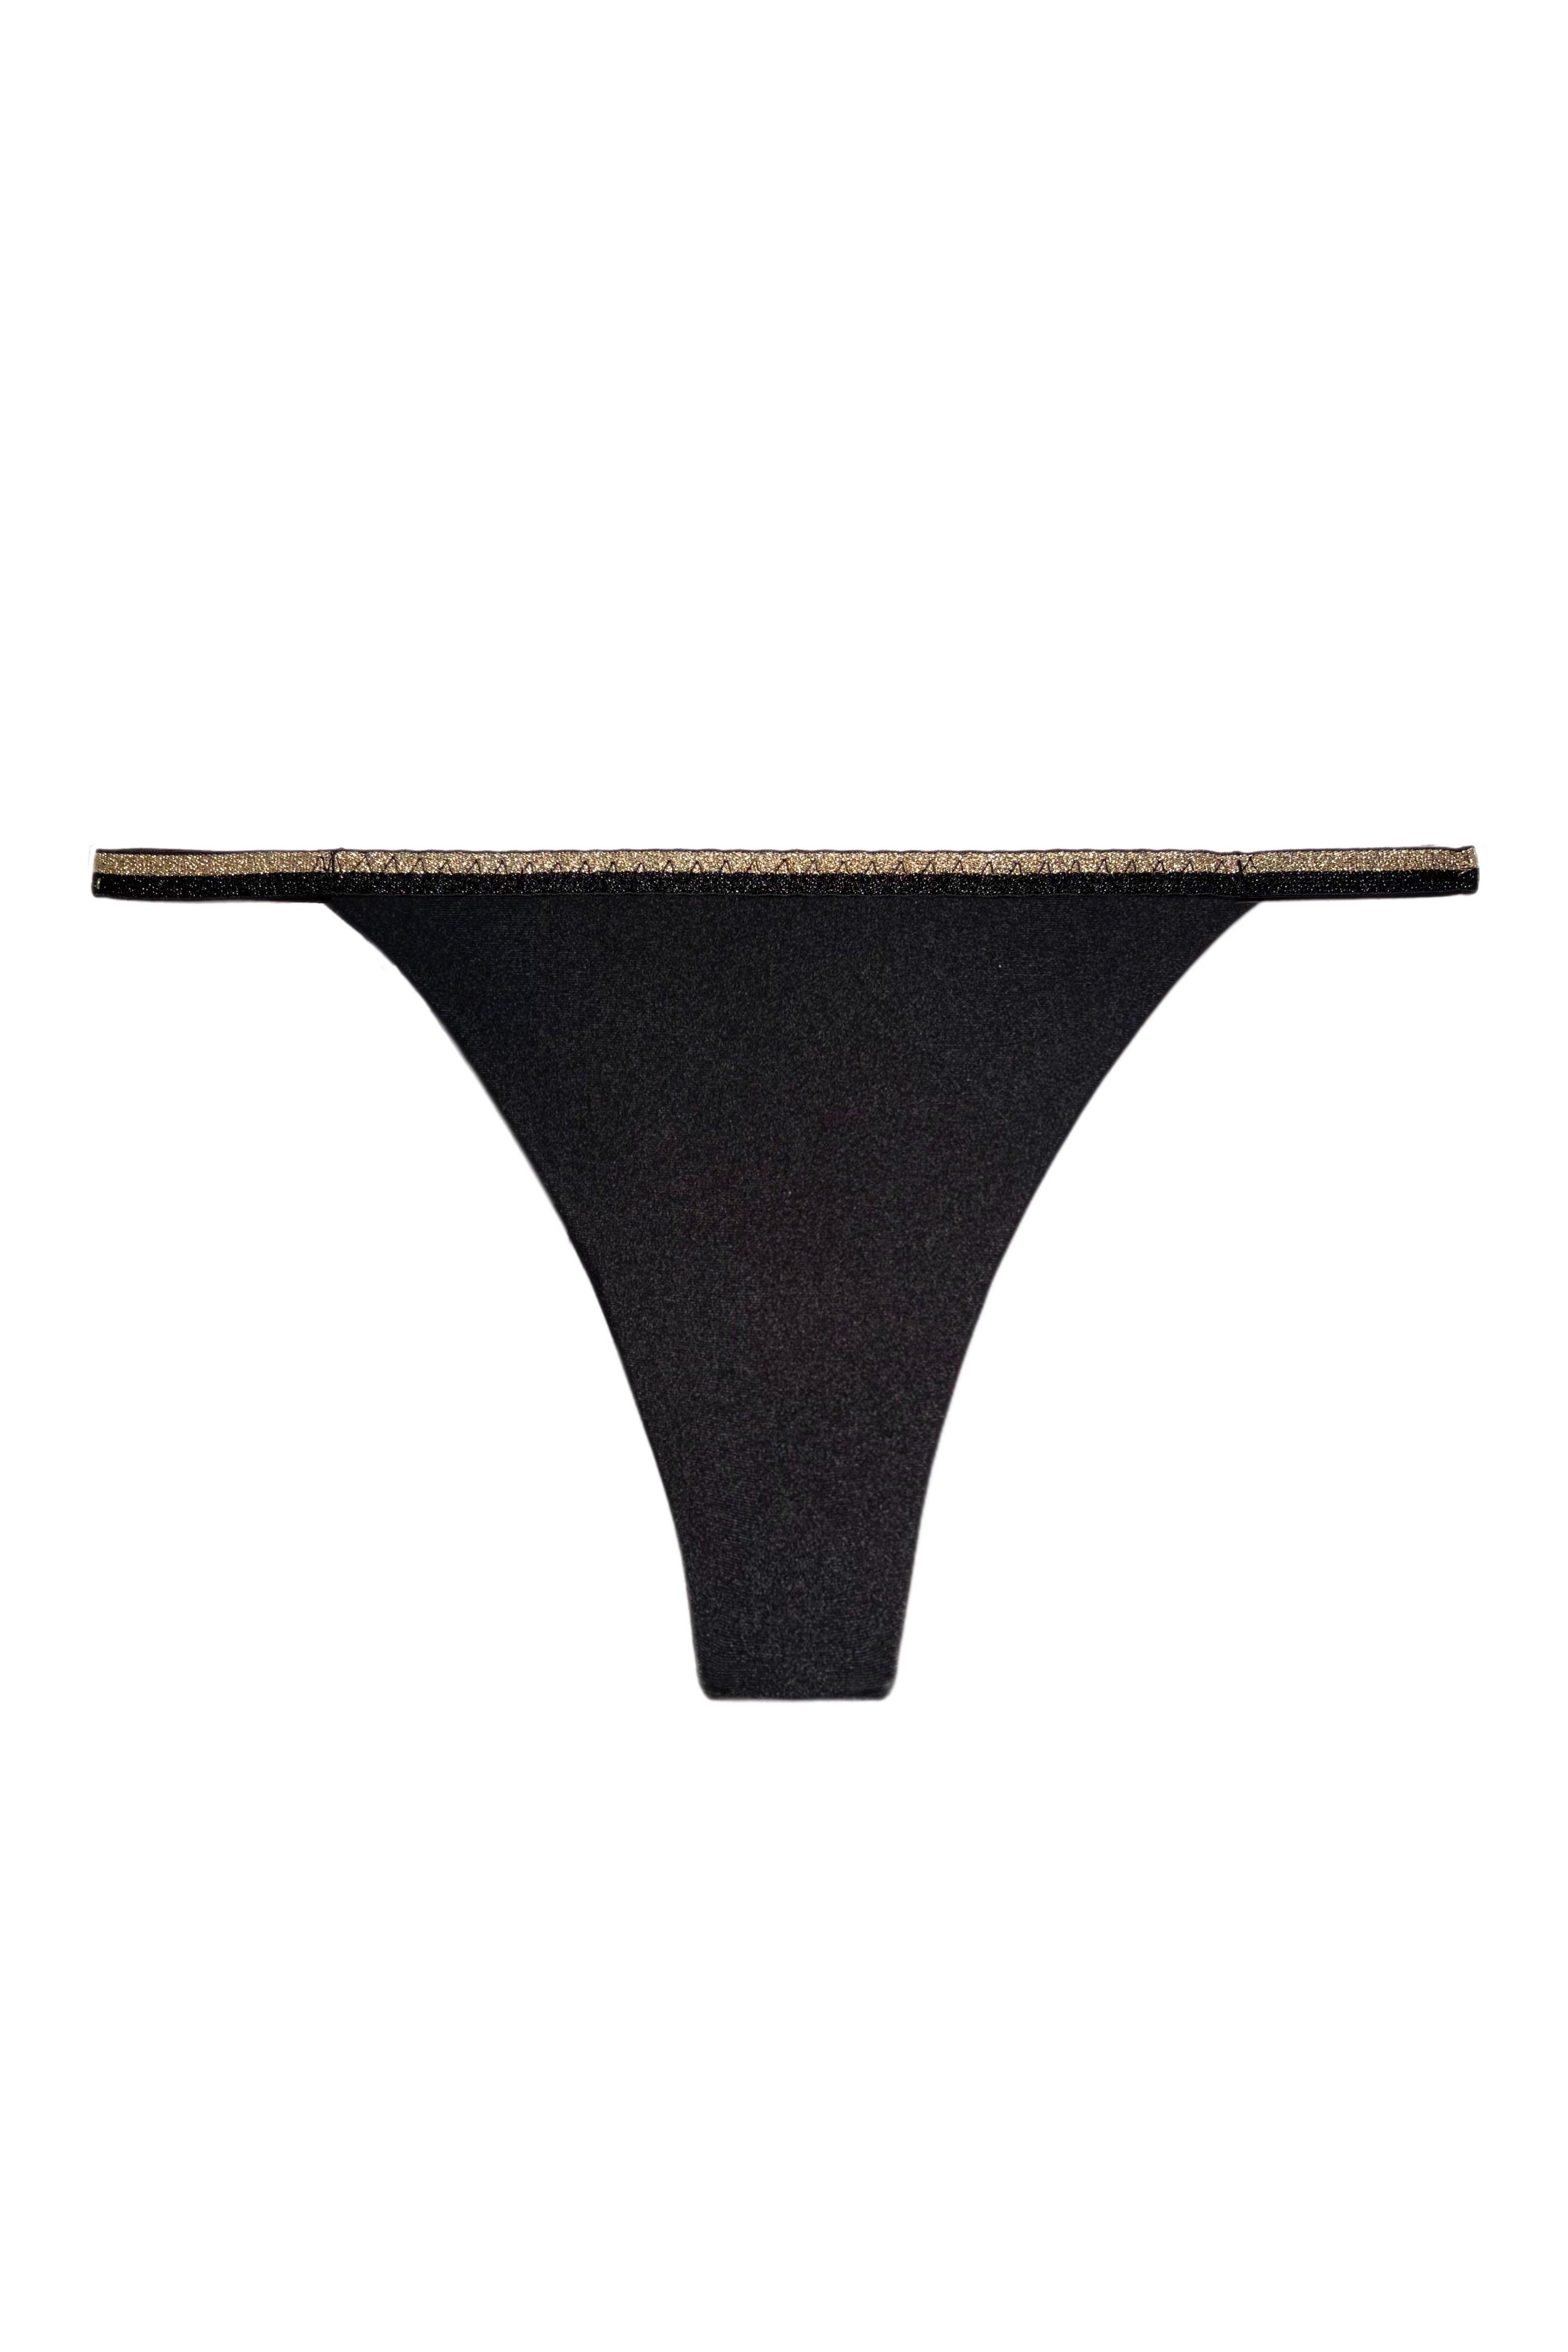 Flexy Black gold thongs – yesUndress